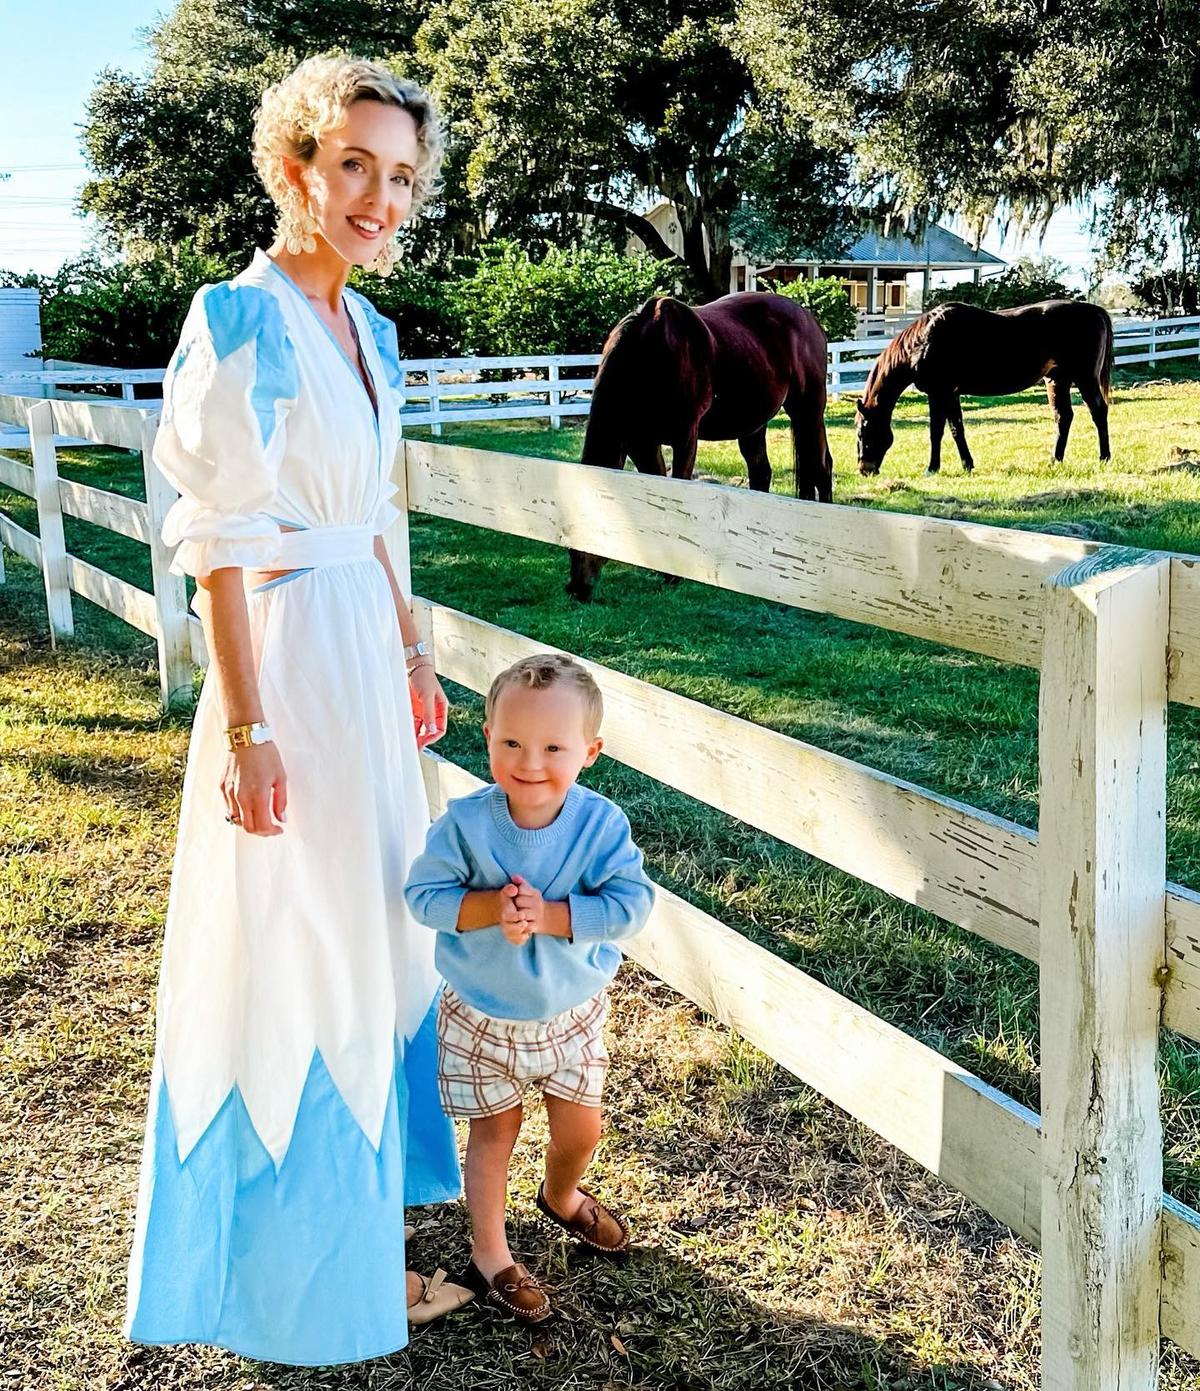 Hudson with his mother, Jennifer. (Courtesy of <a href="https://www.instagram.com/my.beautiful.ds.journey/">Jennifer Hogan Jones</a>)